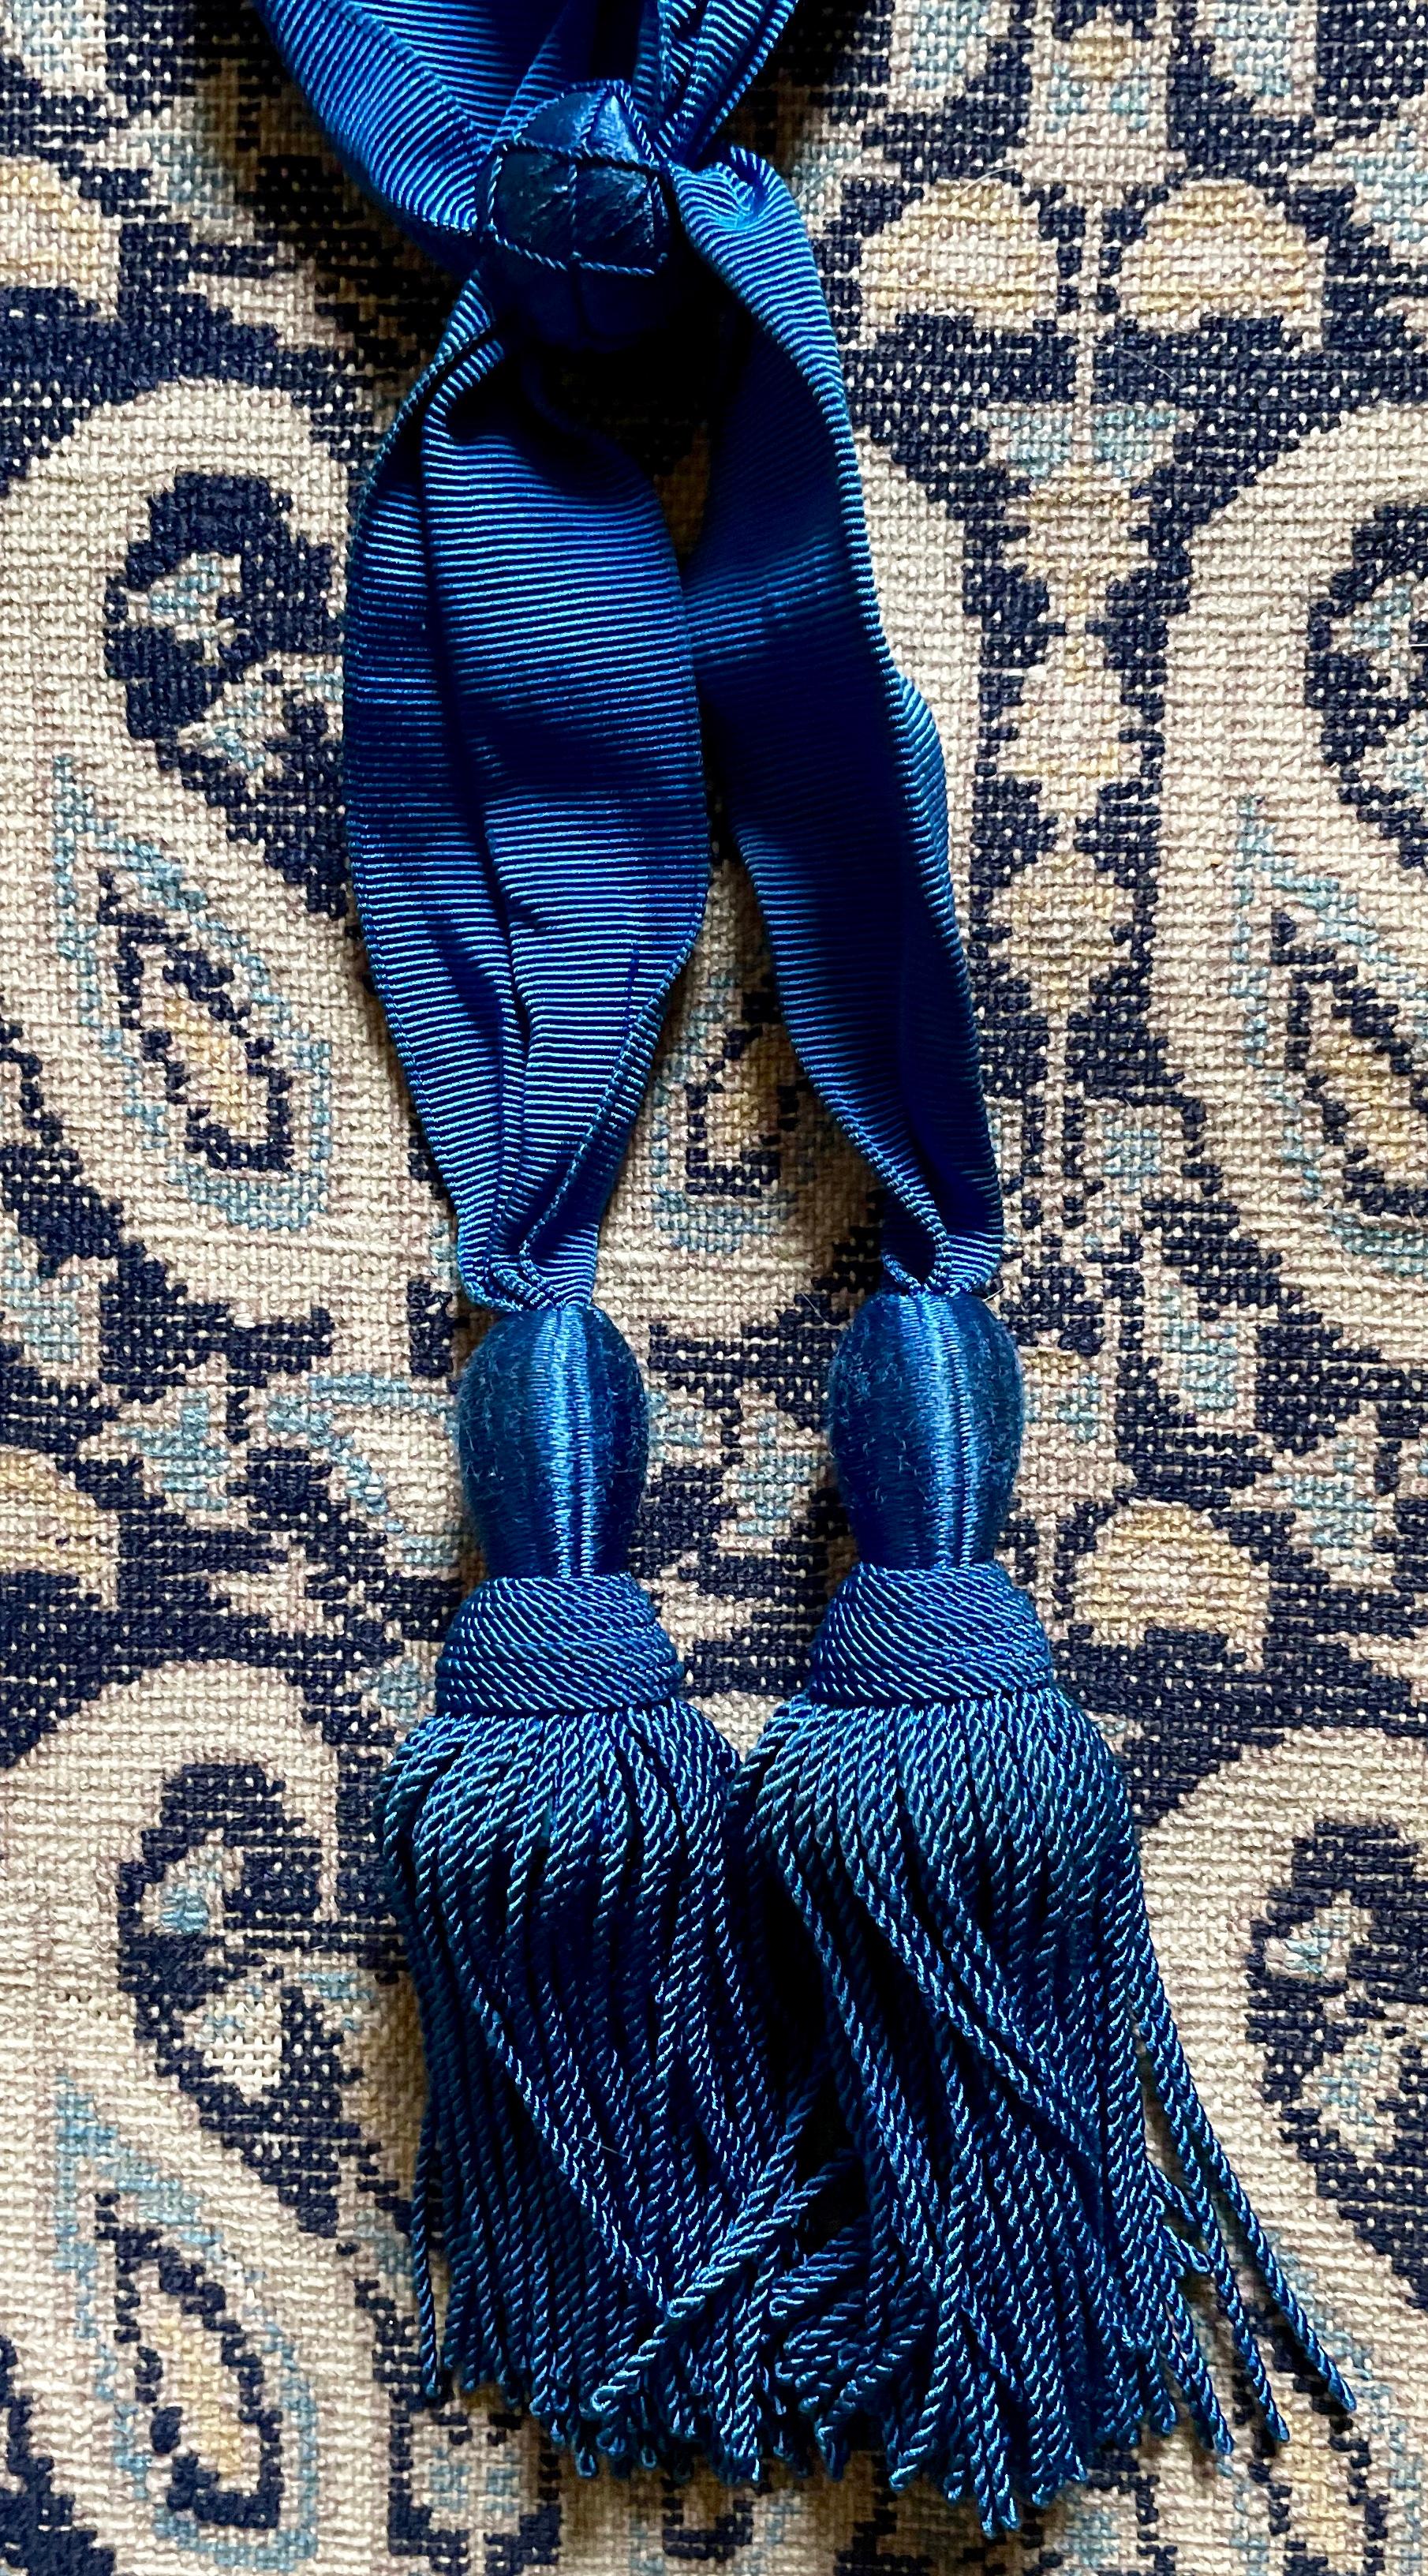 Blue silk grosgrain military sash. Italian blue silk grosgrain with tassels. Italy, early 20th century. 
Dimensions: 38